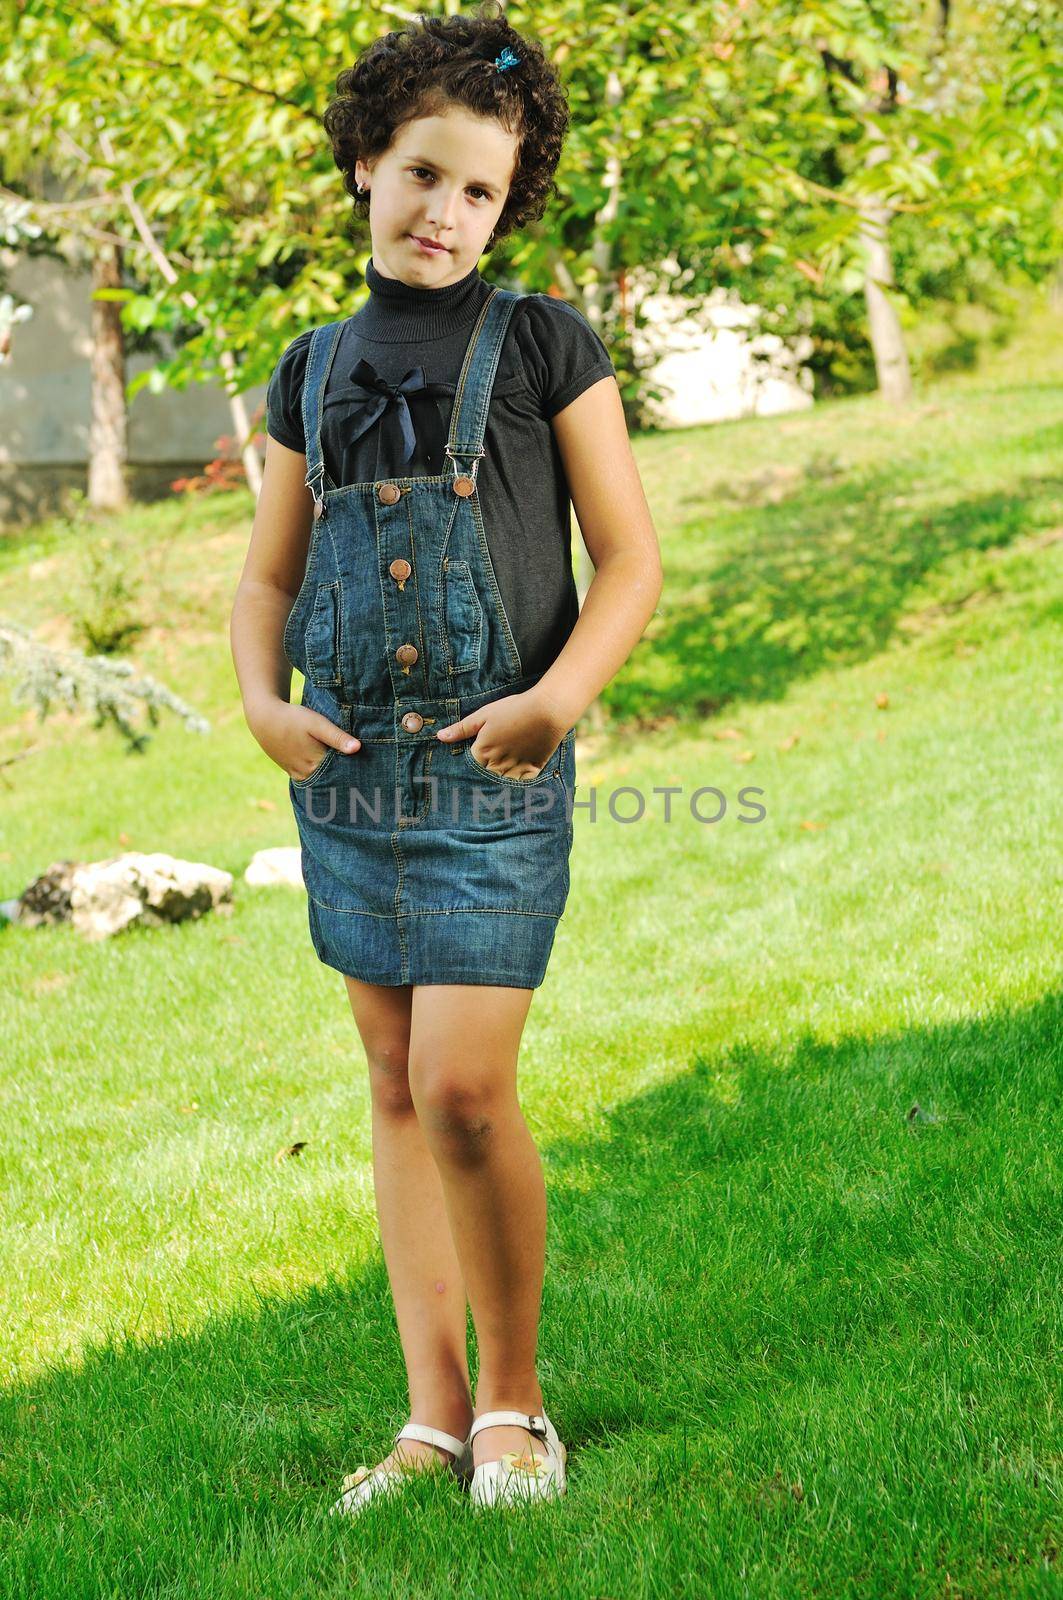 child fashion outdoor by dotshock